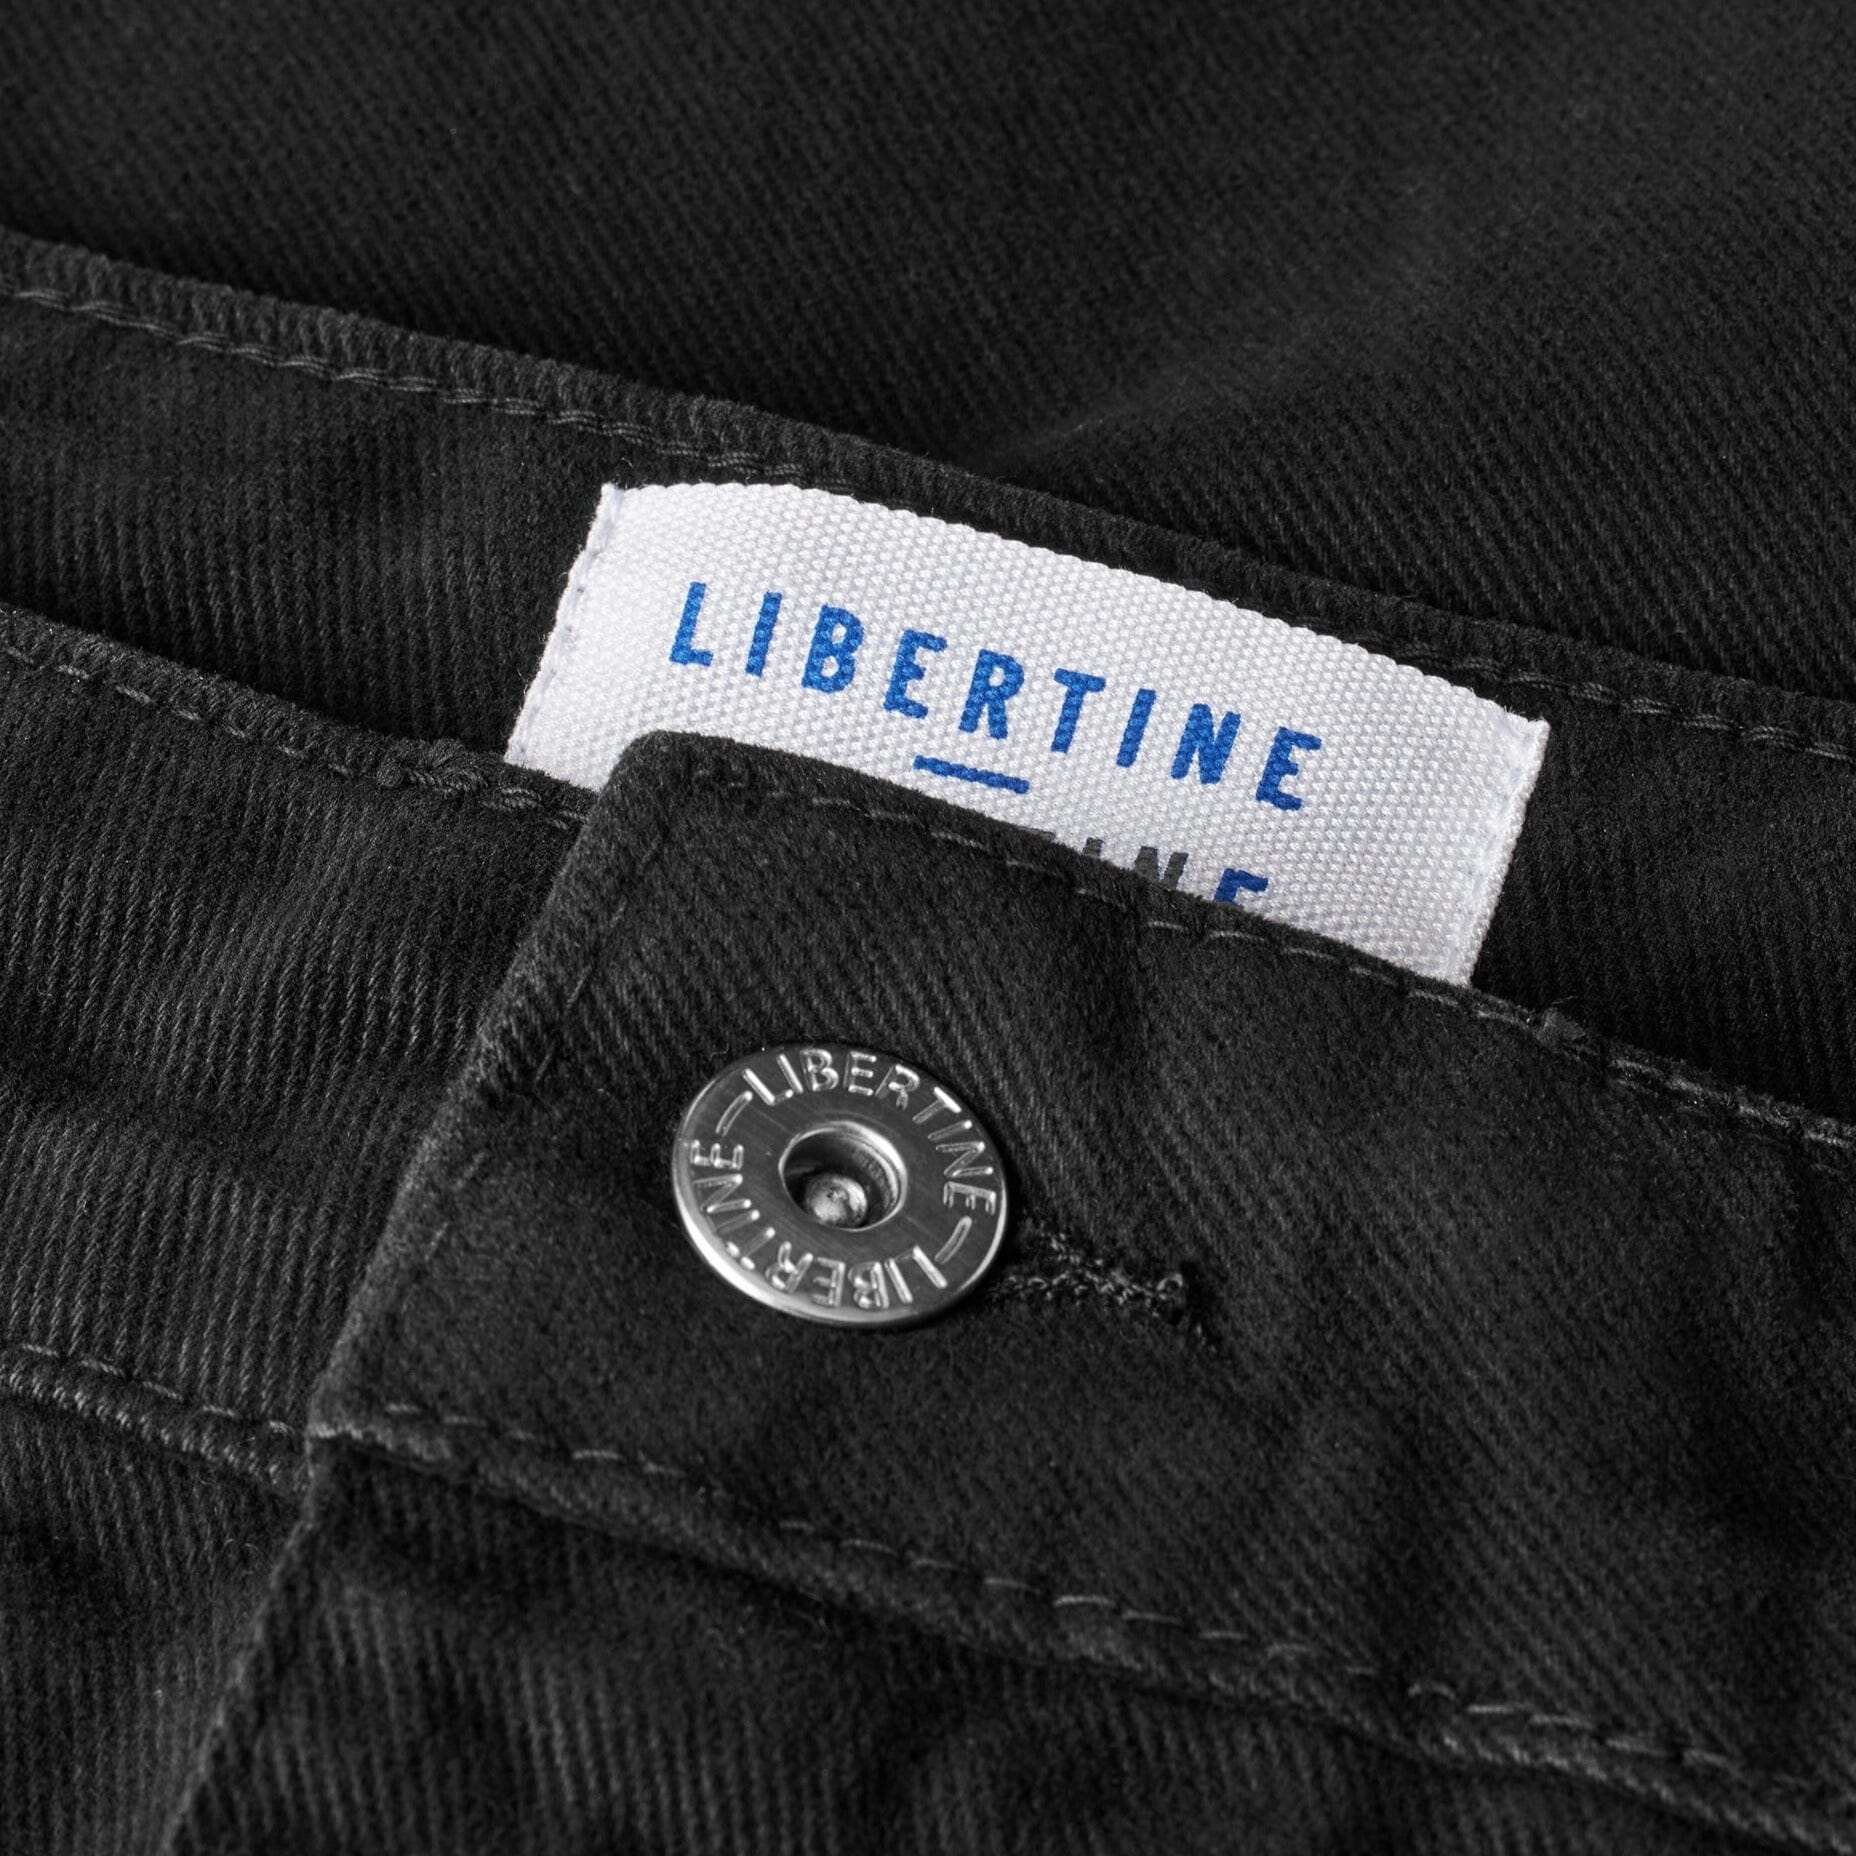 Libertine-Libertine Decade Pants - Jet Black Pants Libertine-Libertine 